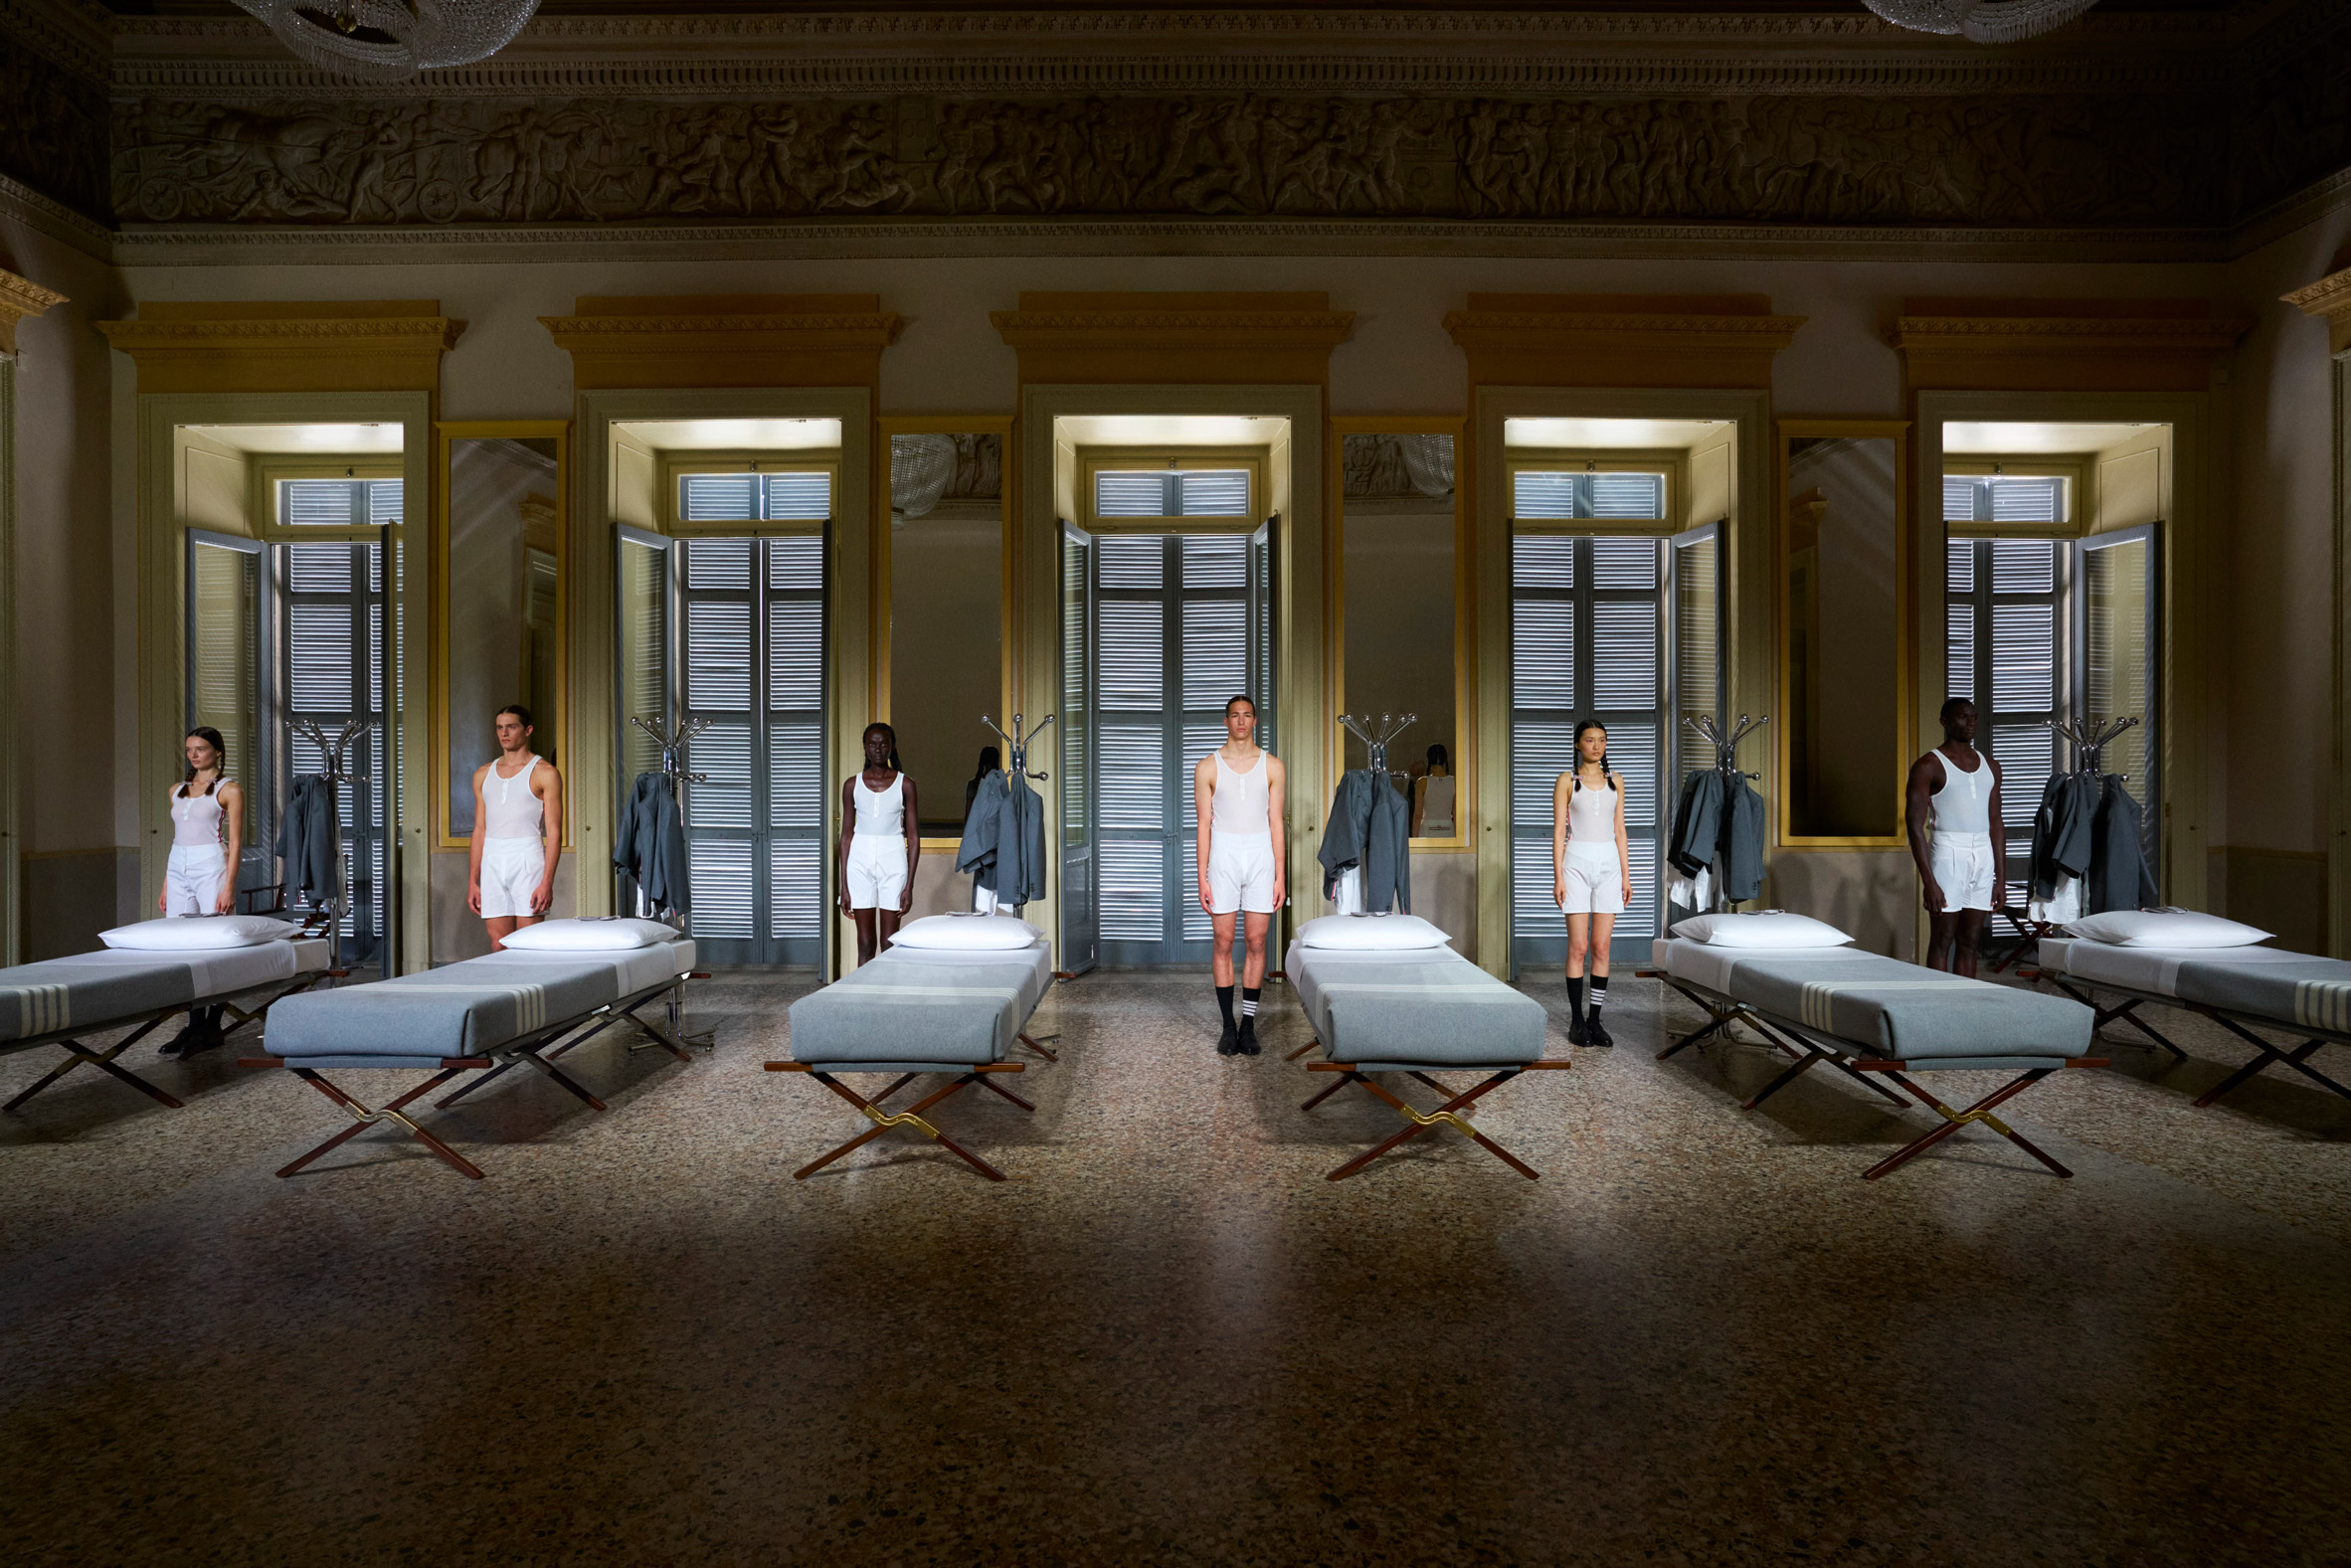 Six models wearing underwear stood beside their respective beds